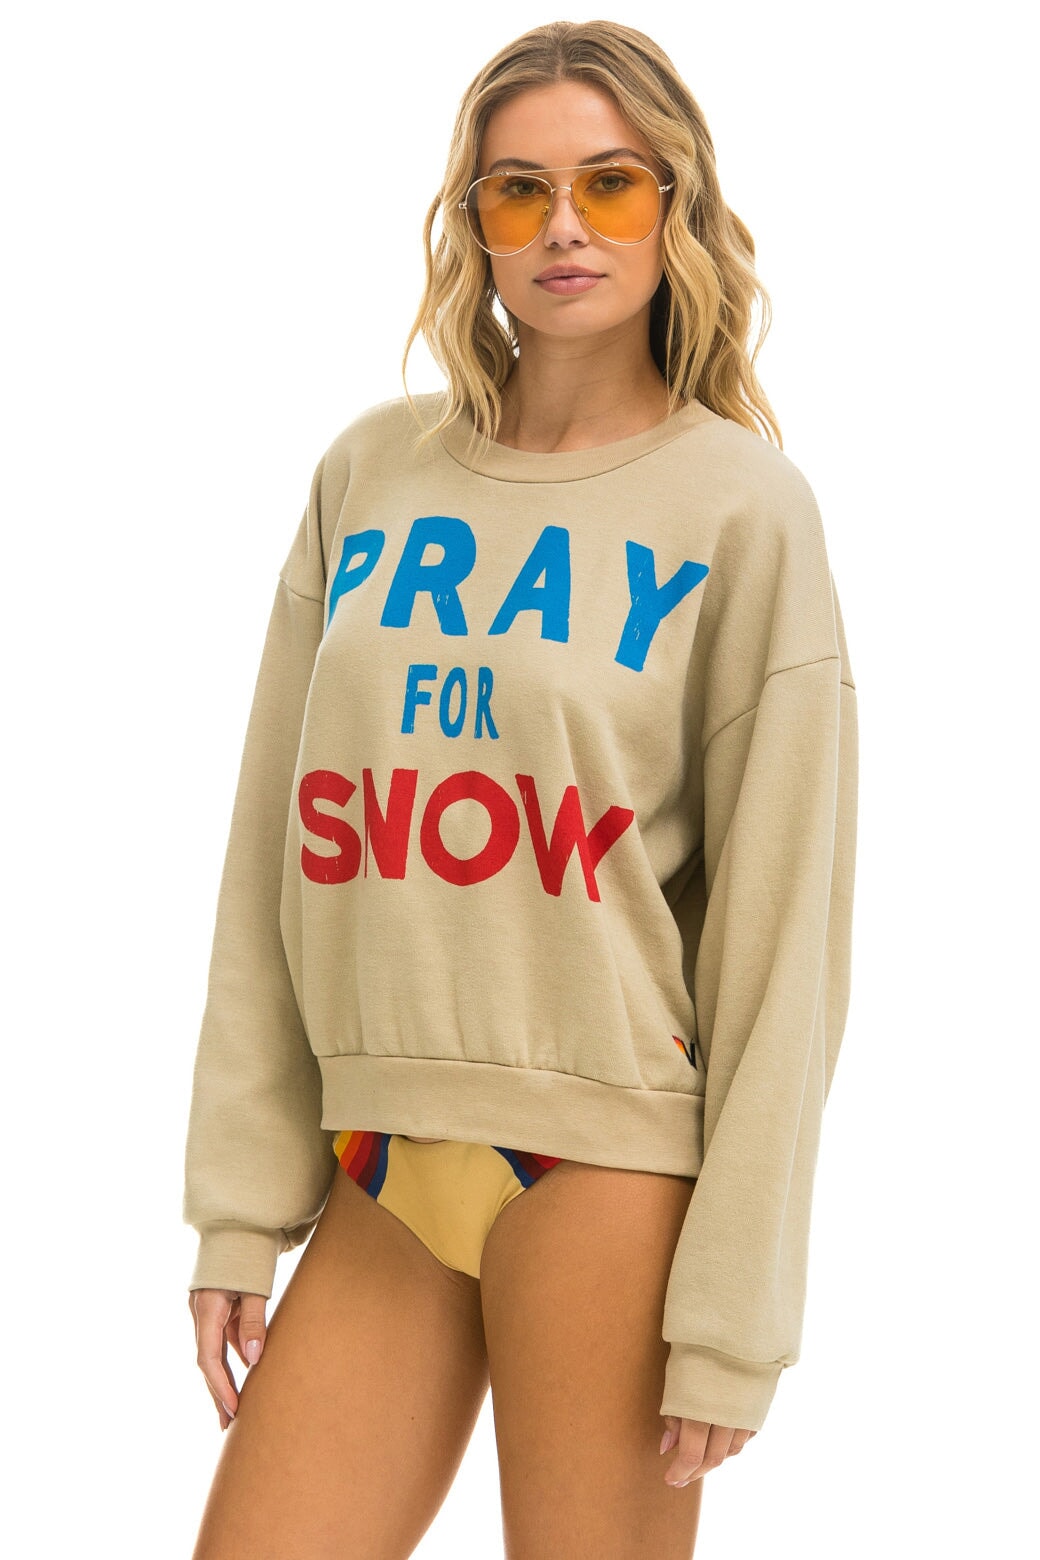 PRAY FOR SNOW RELAXED CREW SWEATSHIRT - SAND Sweatshirt Aviator Nation 